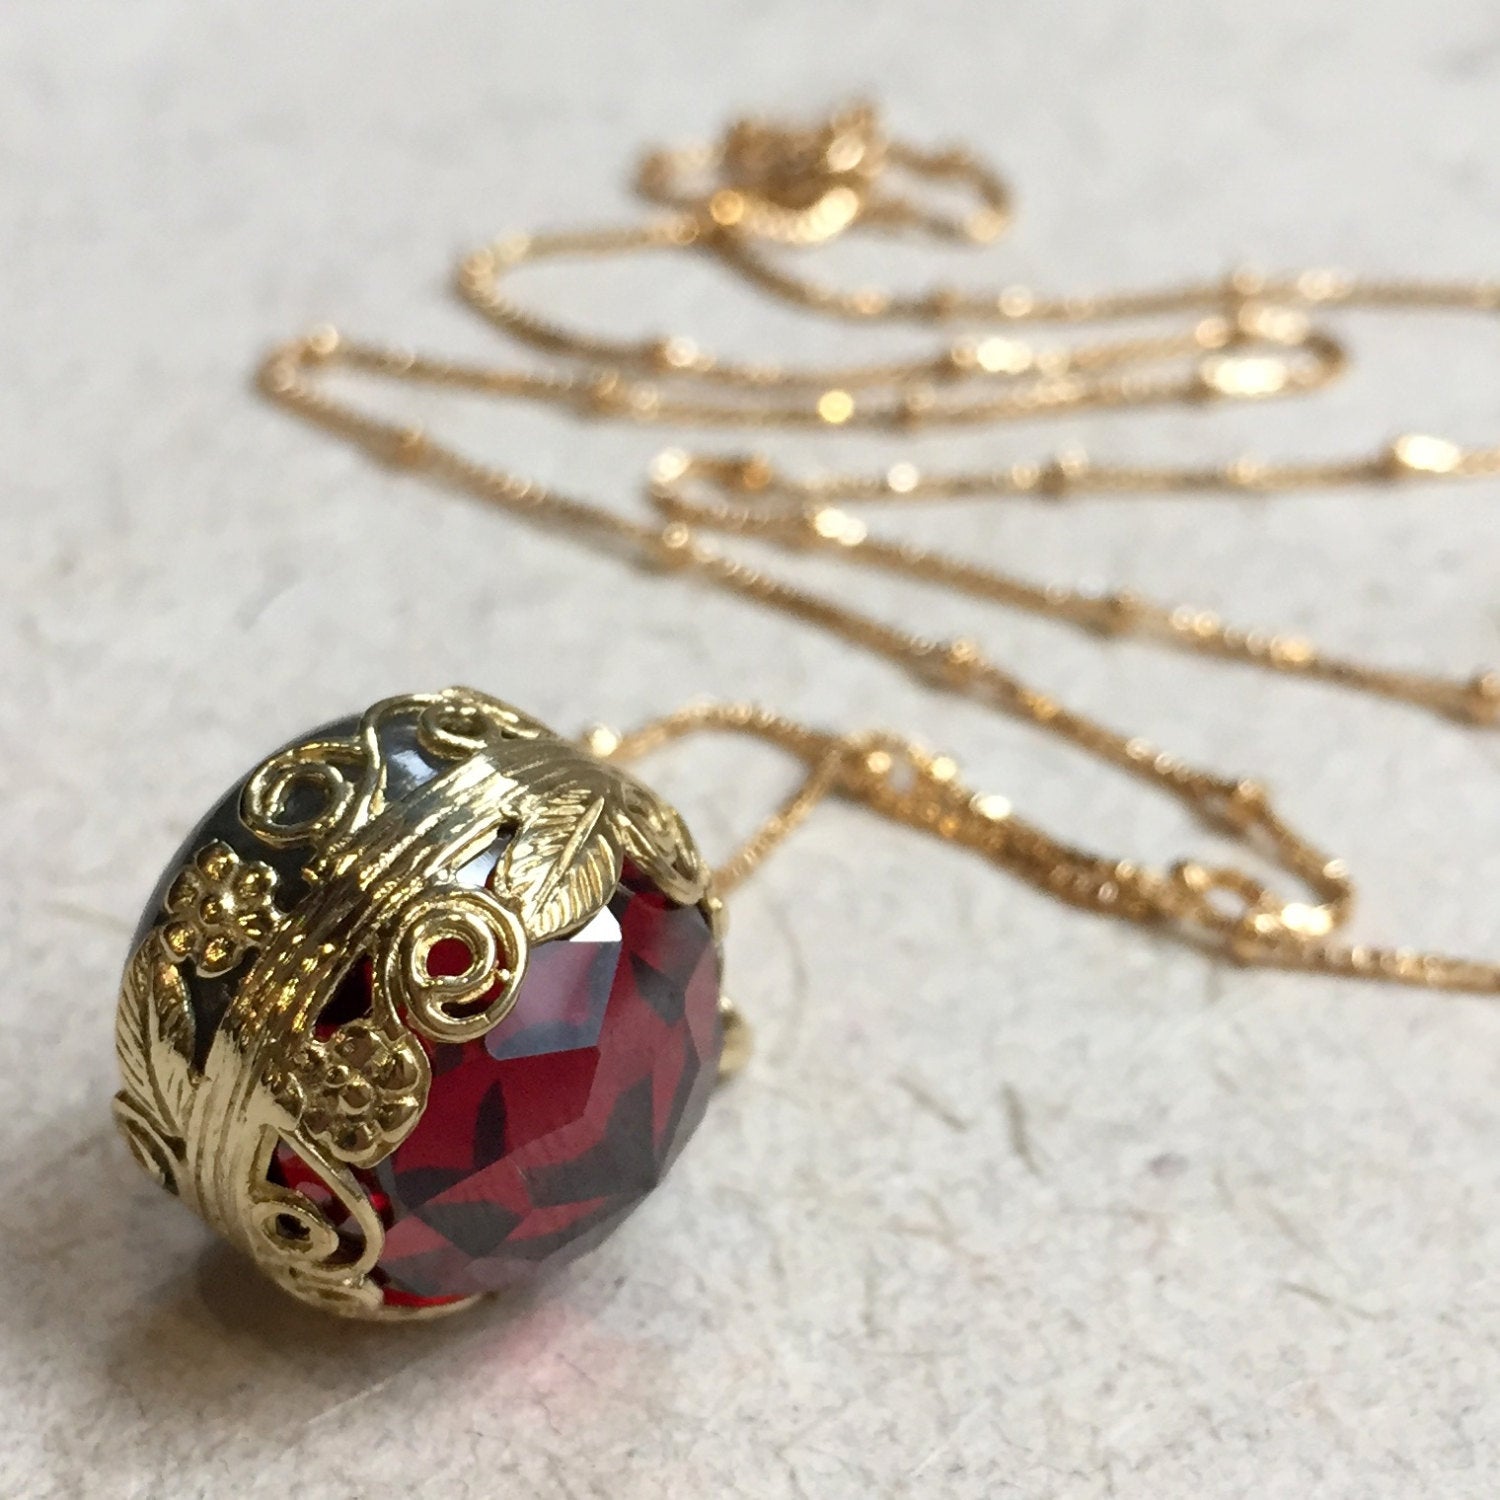 Garnet pendant, Labradorite Golden brass necklace, birthstones pendant, two sides pendant, floral energy ball, boho - Neverland NK2000-3